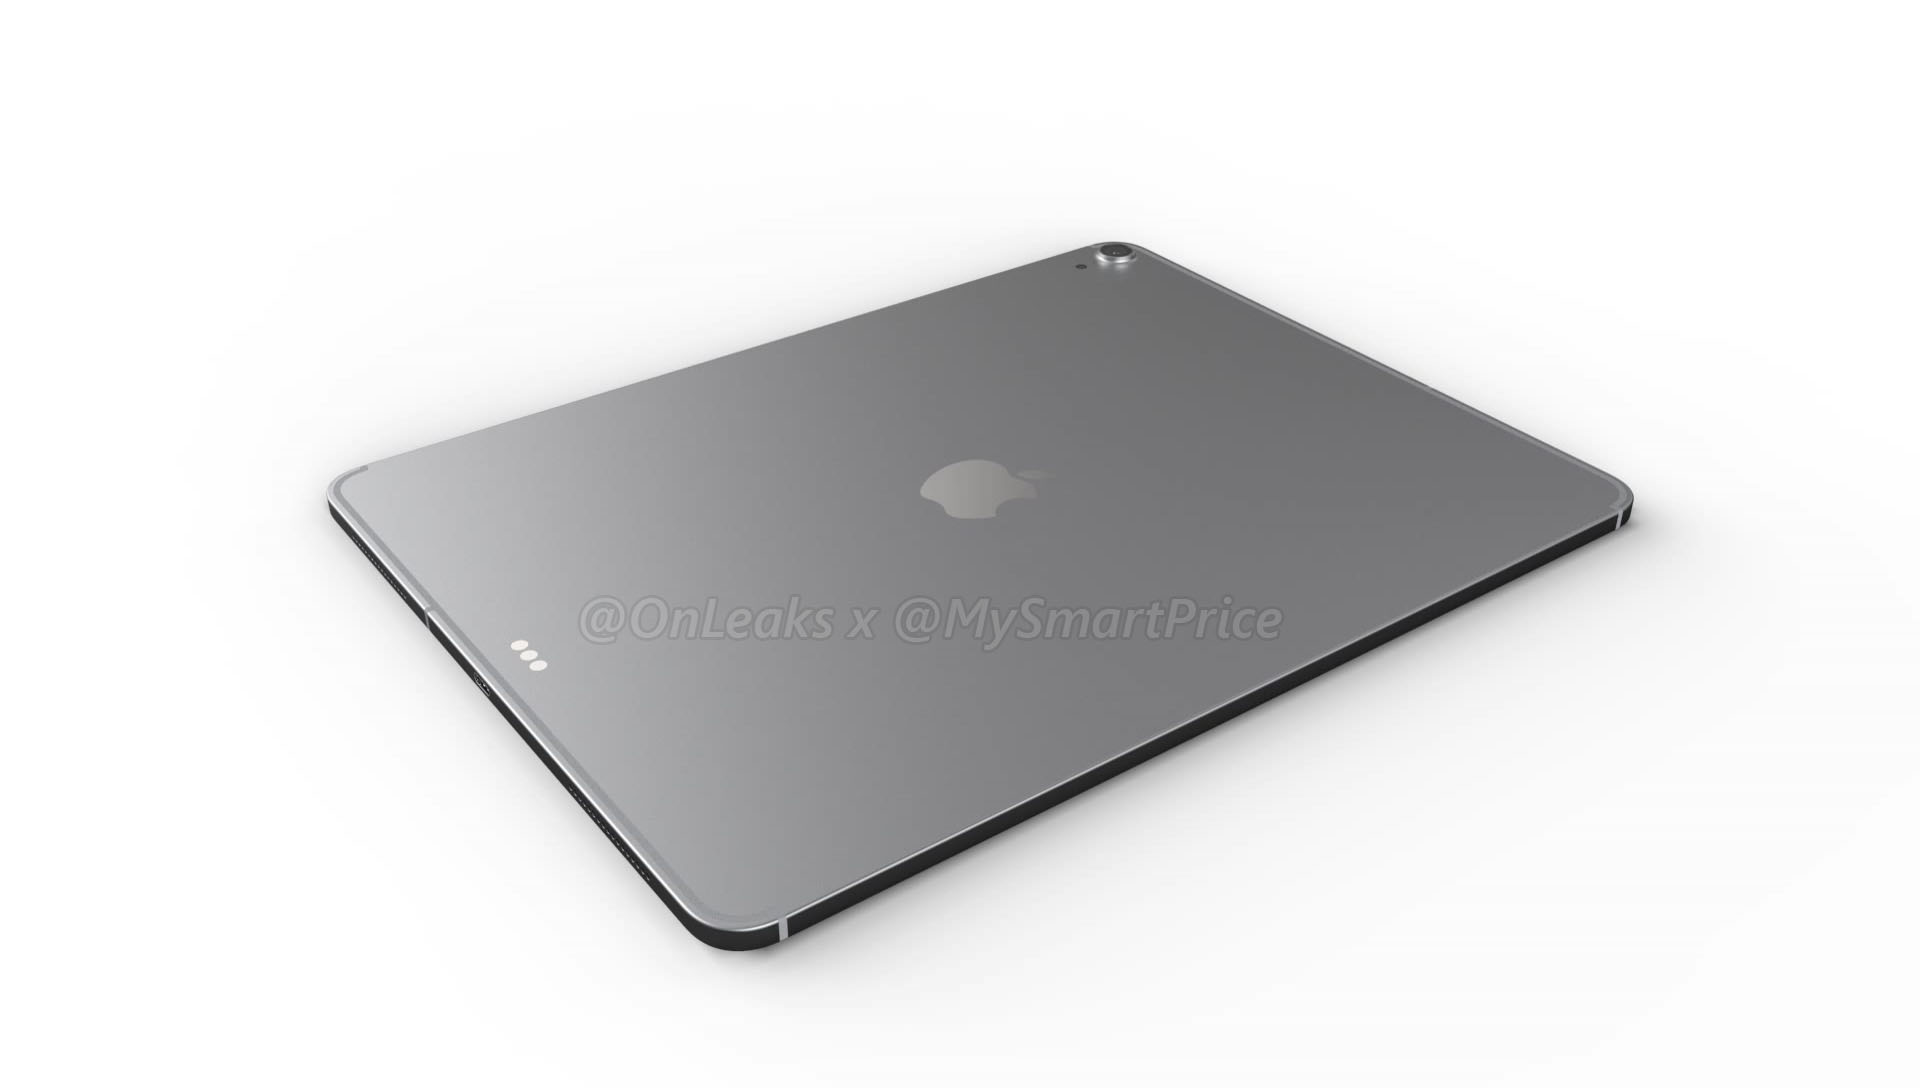 iPad Pro New render images